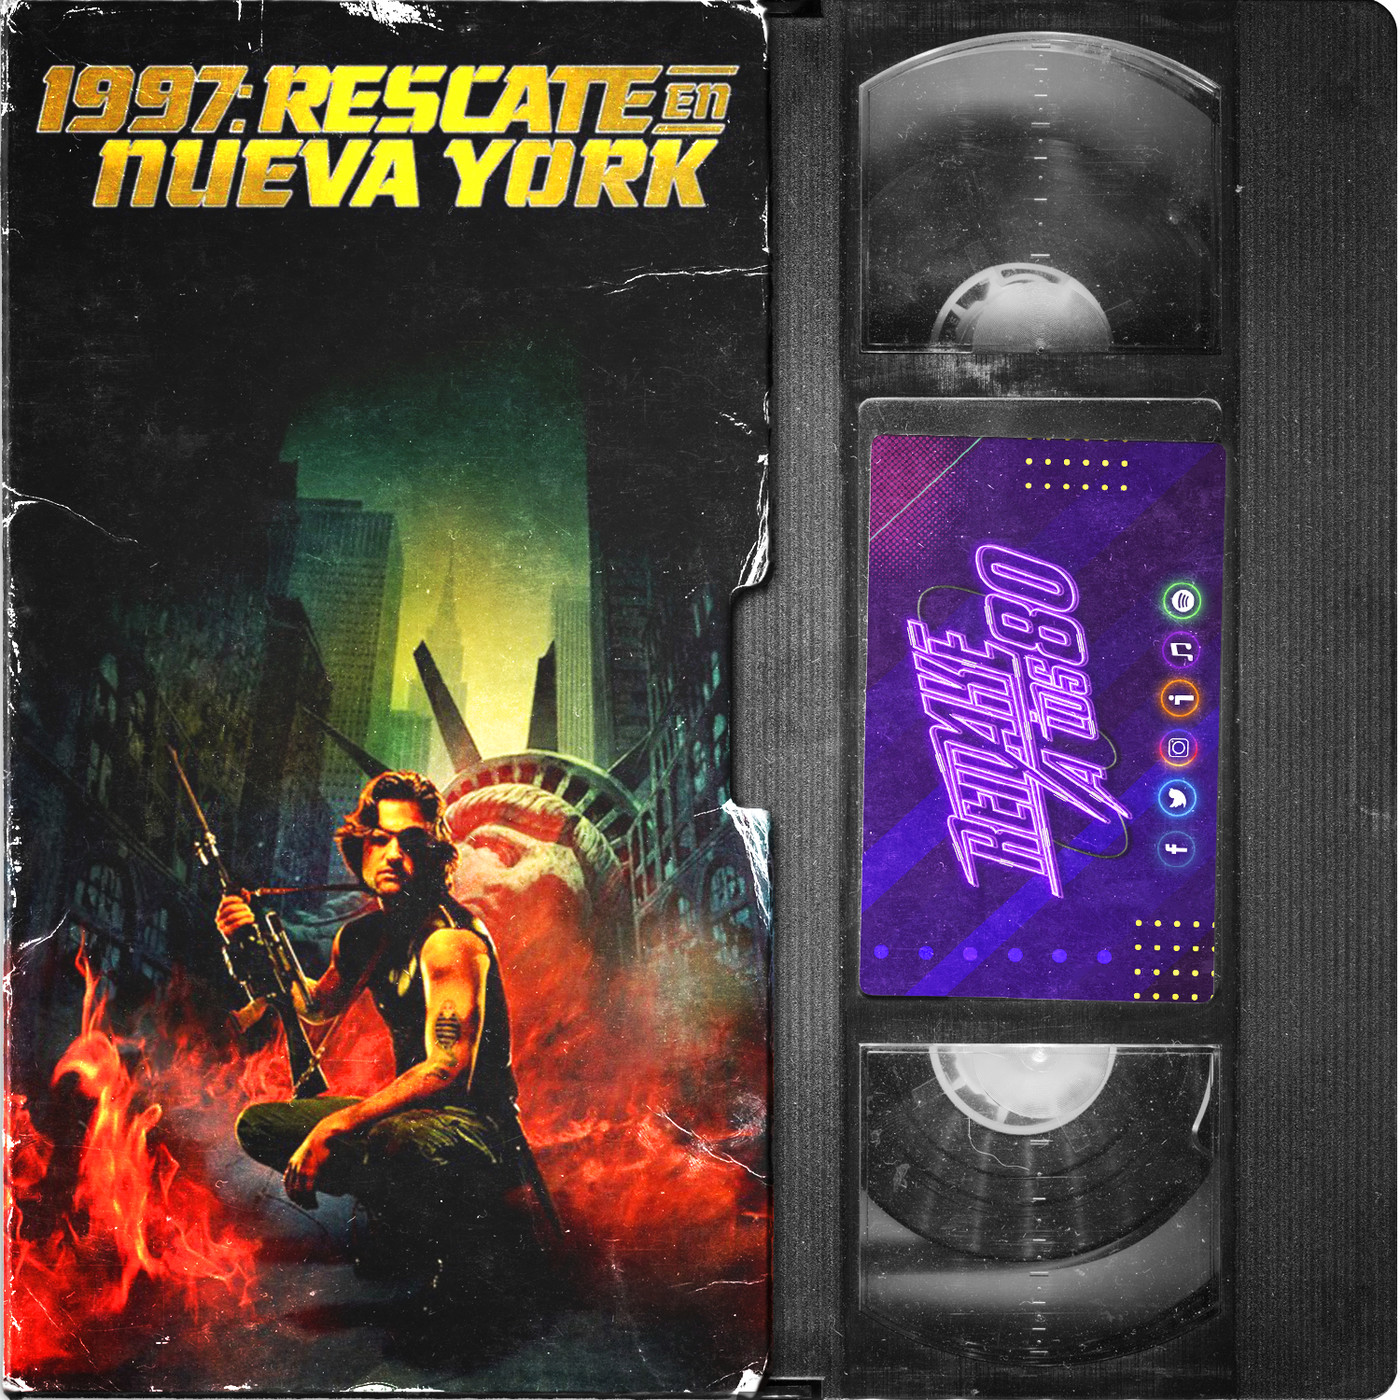 07x05 Remake a los 80, 1997: RESCATE EN NEW YORK (John Carpenter, 1981)